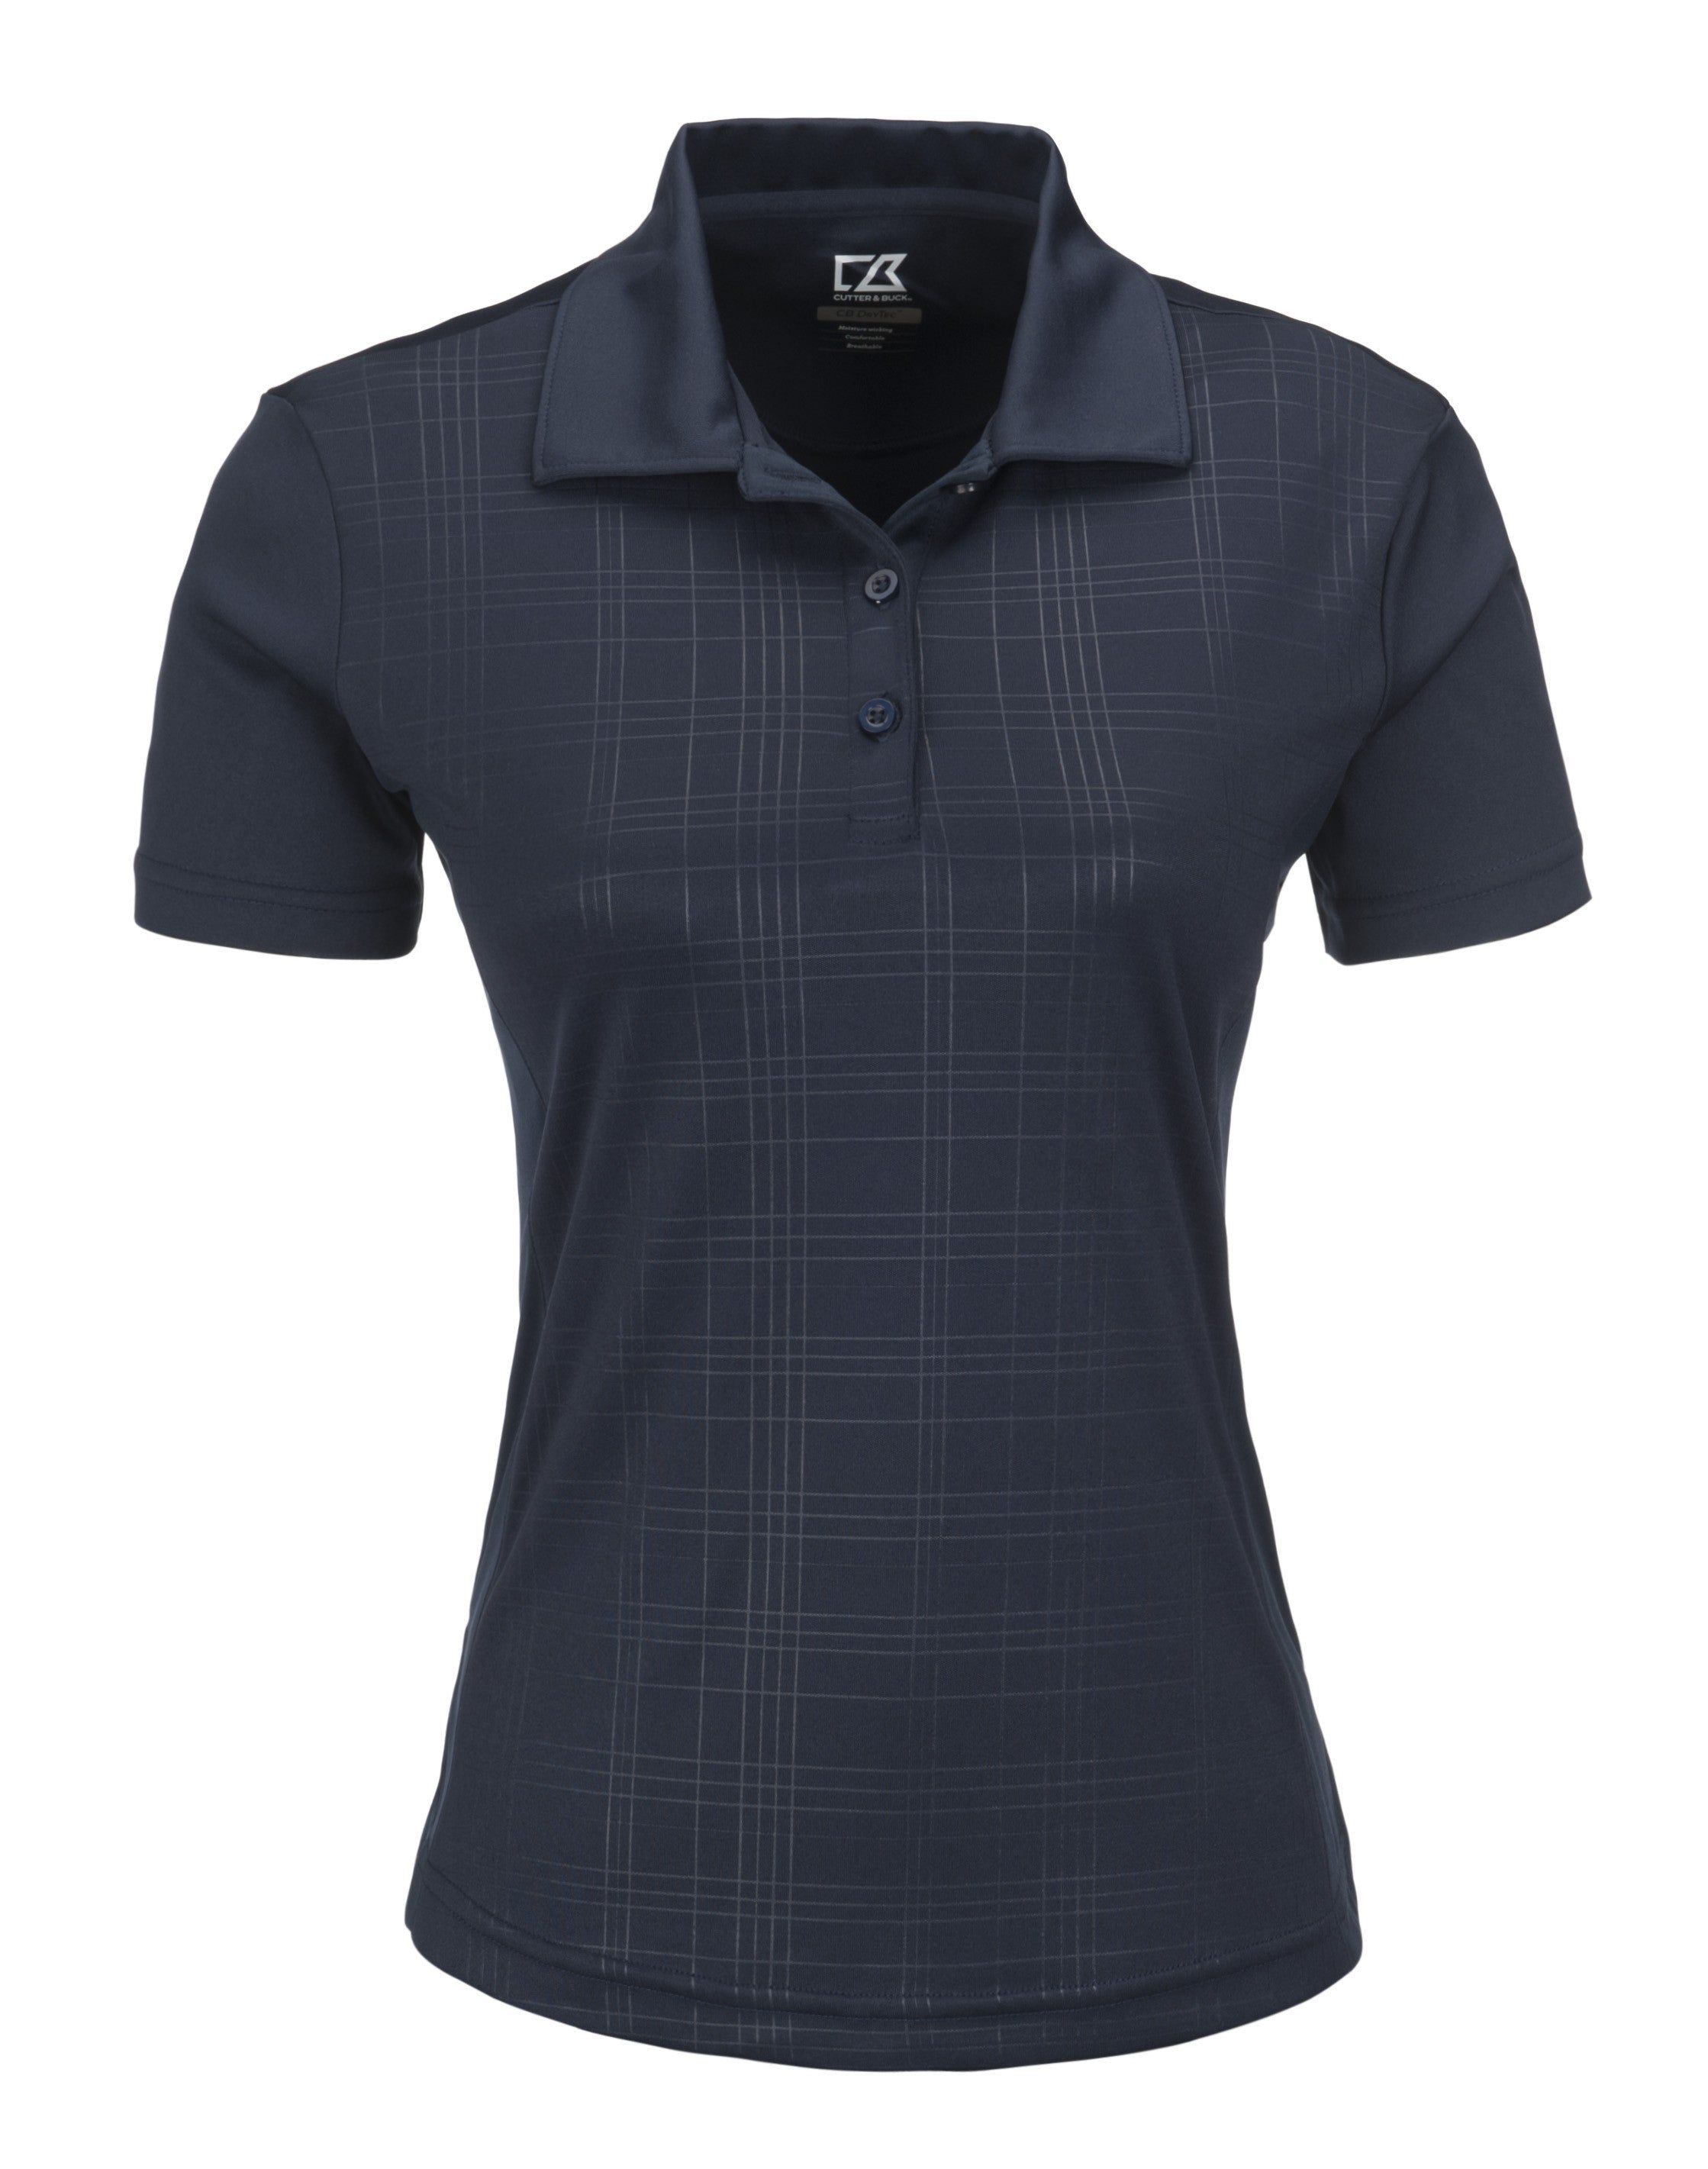 Ladies Sullivan Golf Shirt - Light Blue Only-2XL-Navy-N